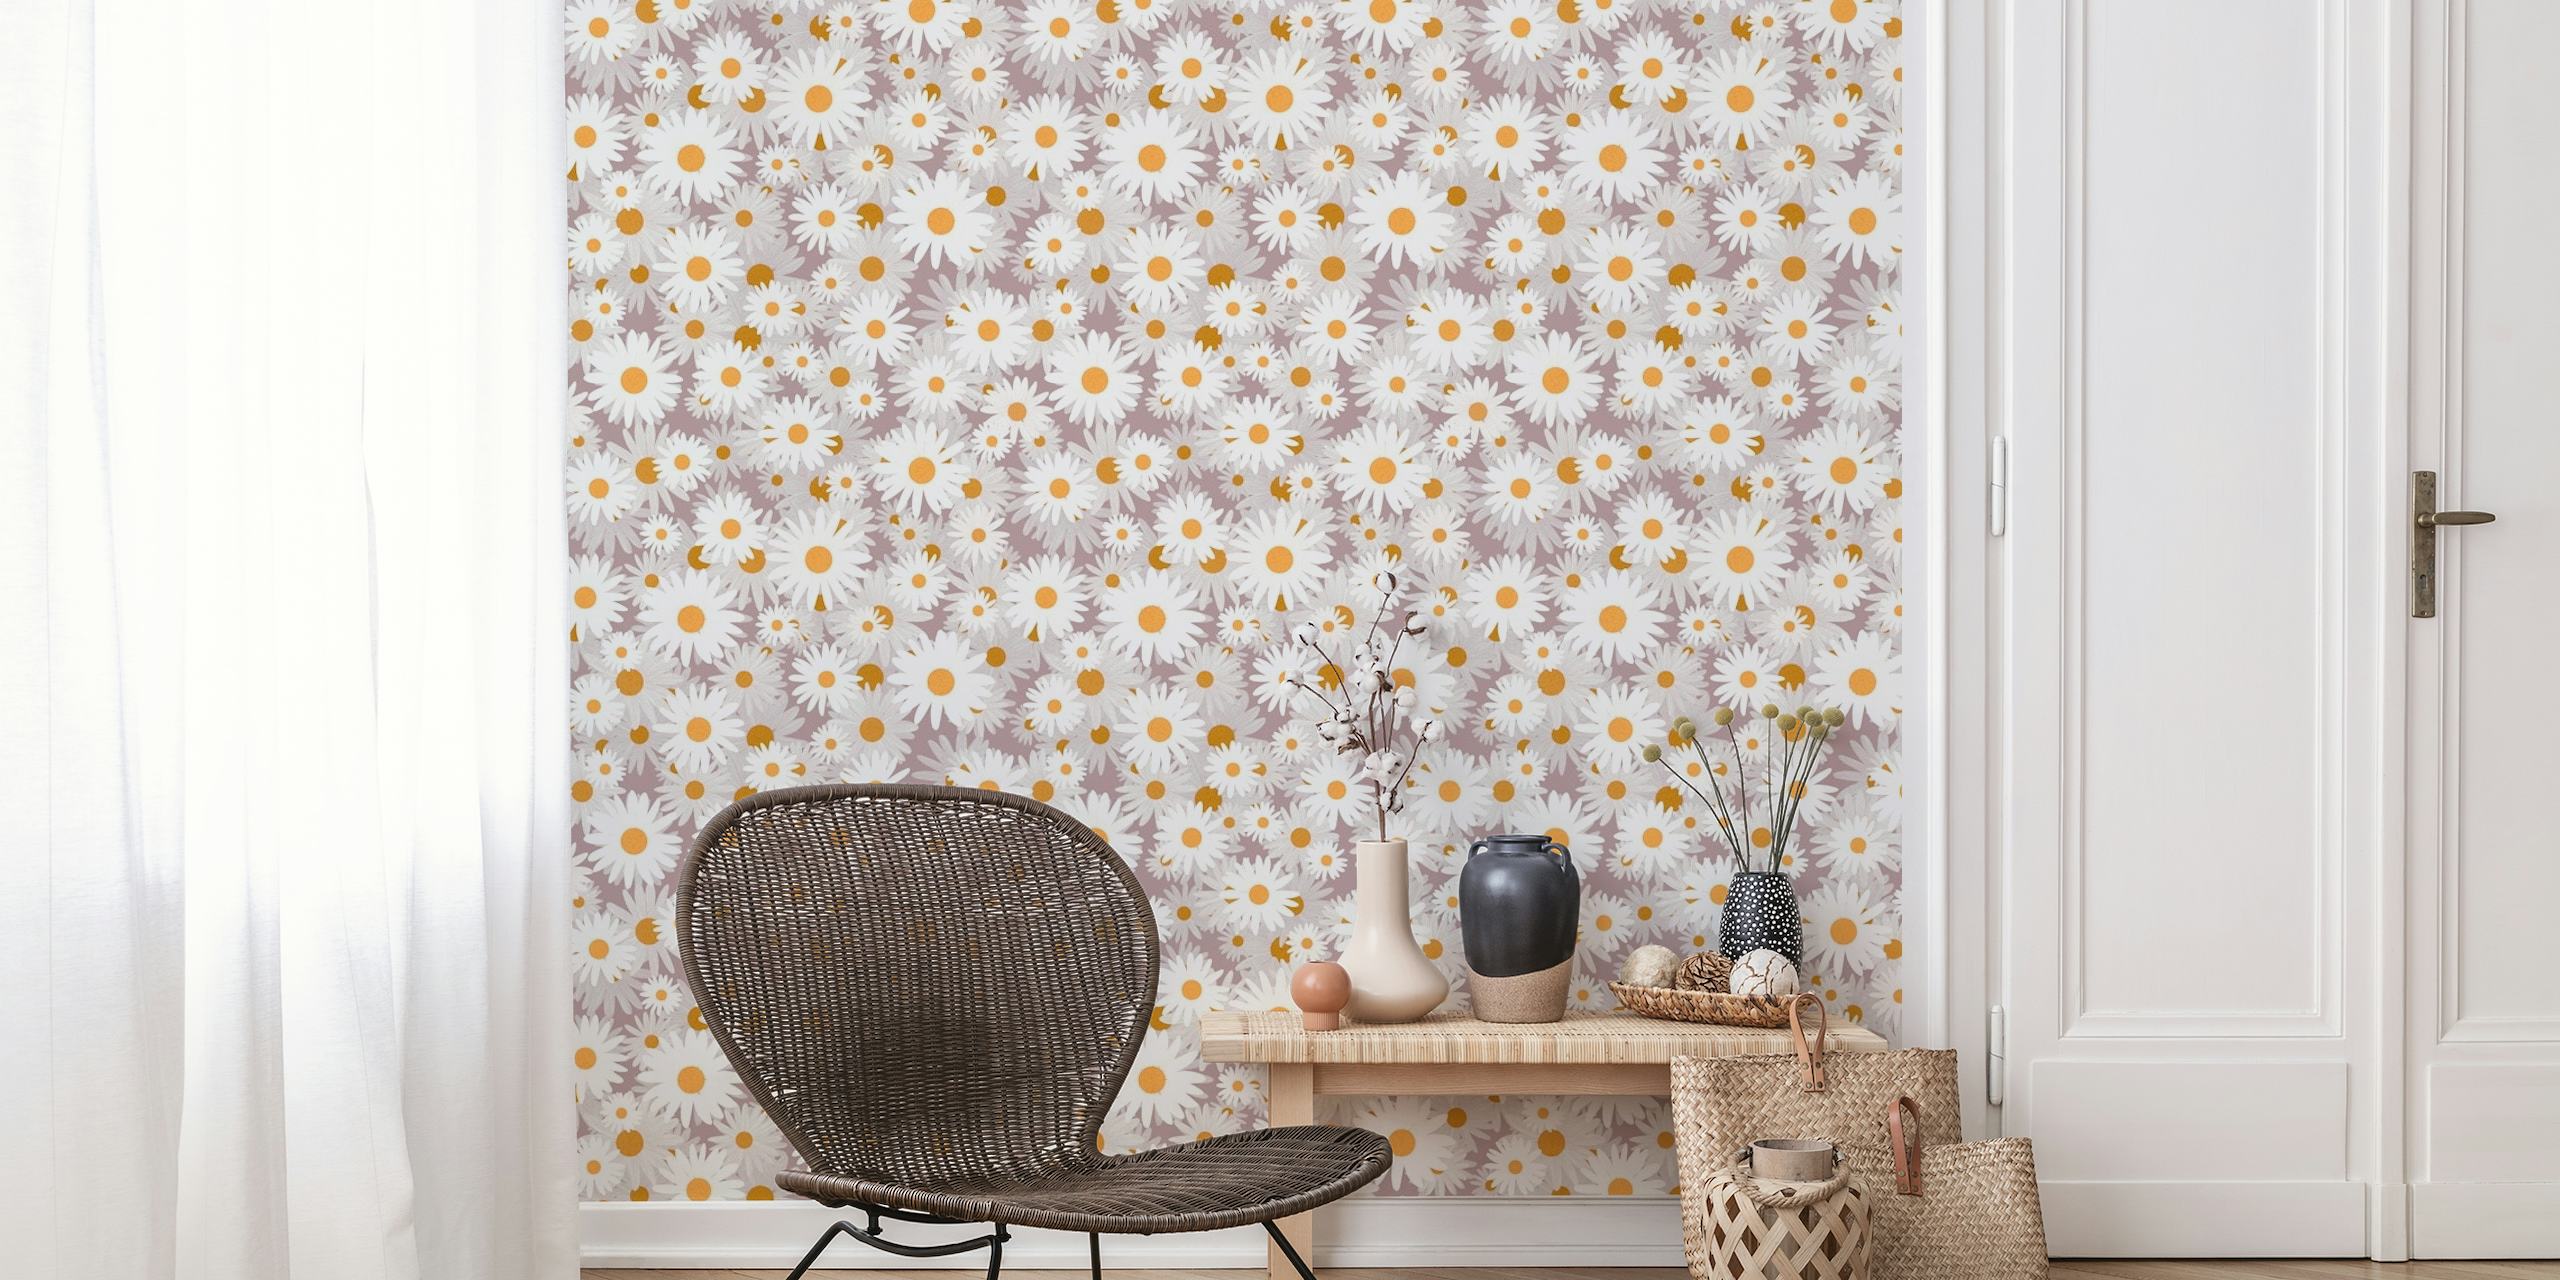 White Daisies pattern wallpaper